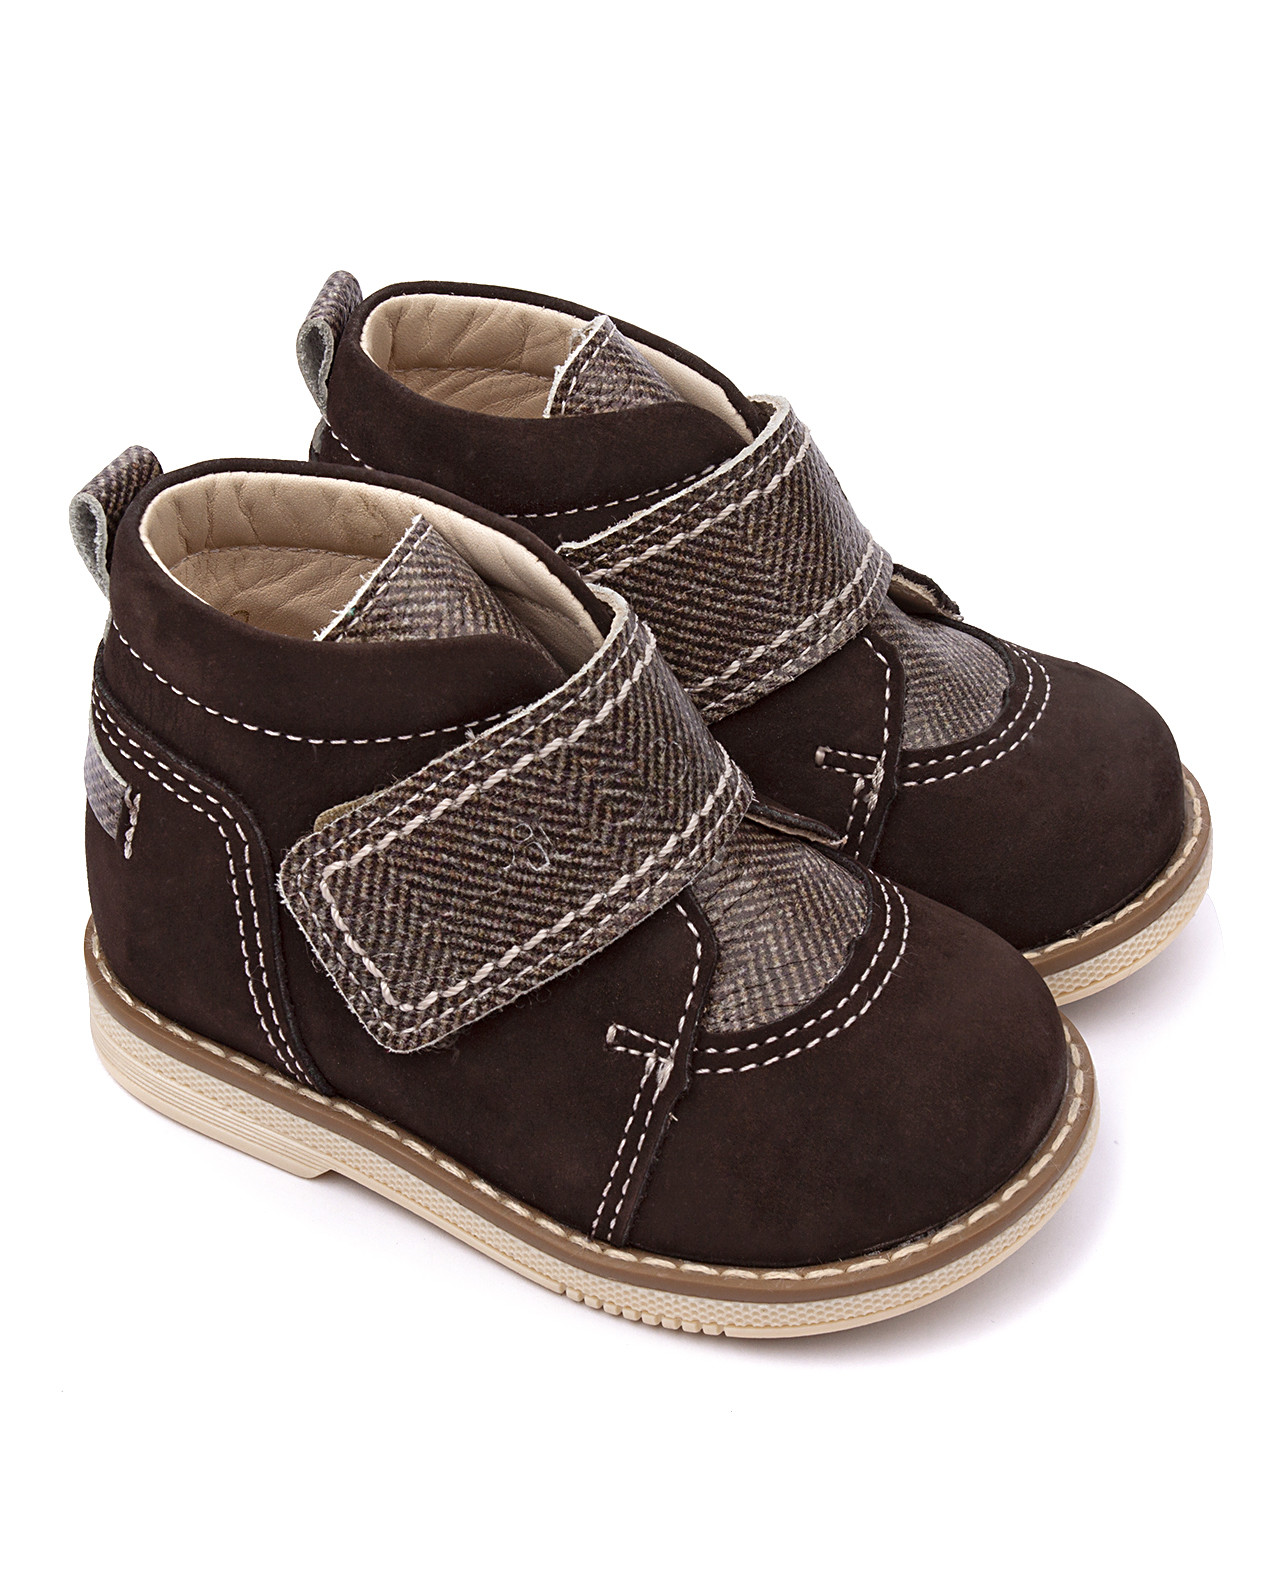 ботинки детские 24015 нарцисс коричневый твид 2021 р19 Ботинки детские Tapiboo, НАРЦИСС ТВИД (76472, 25)